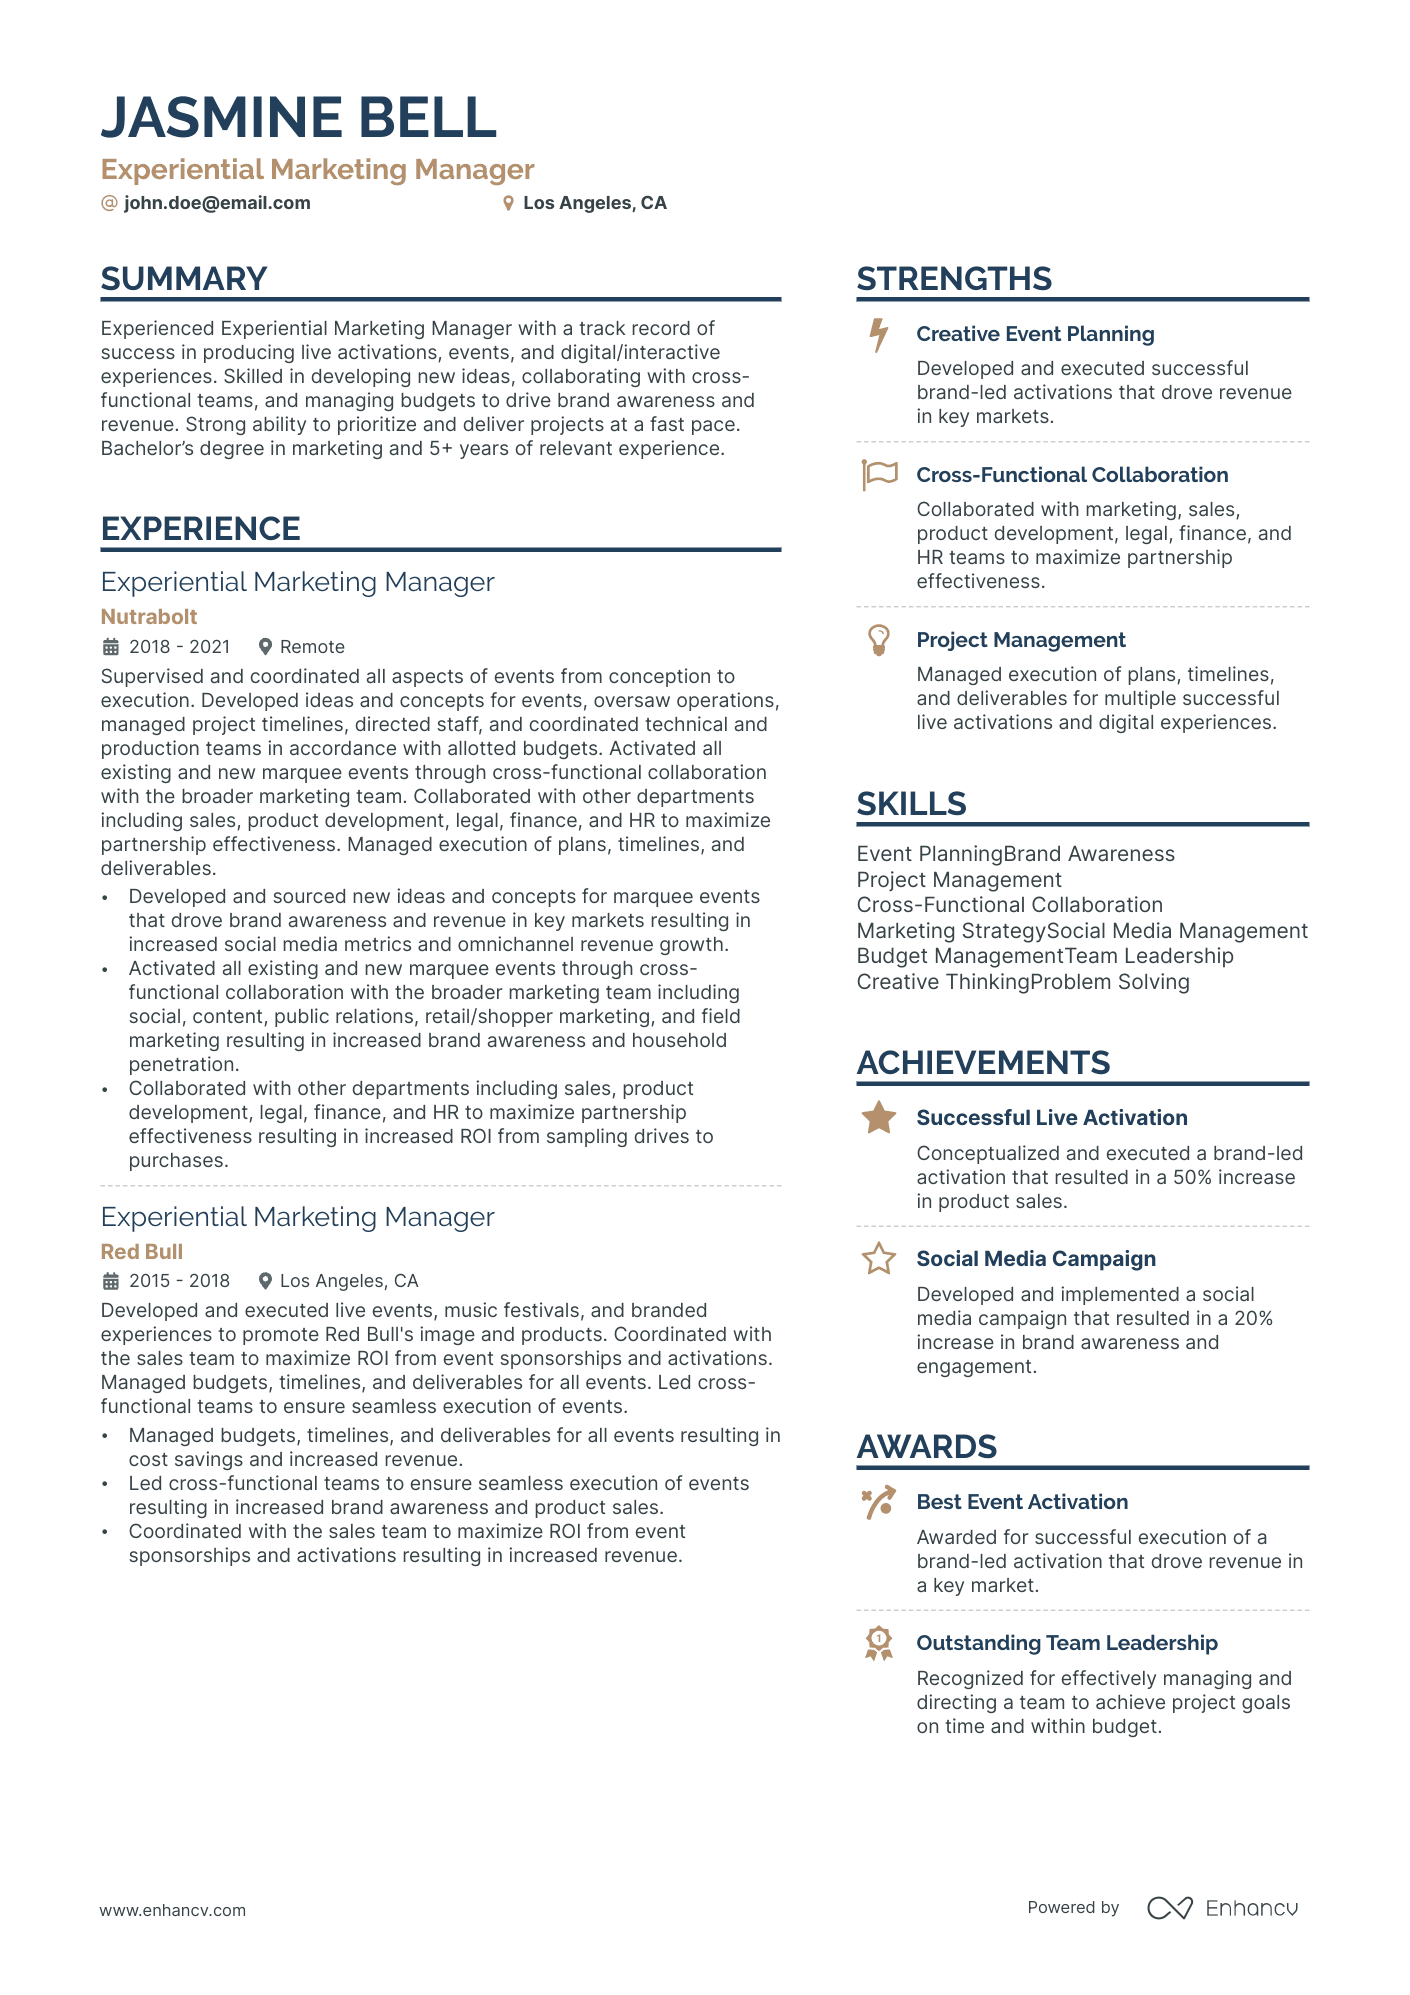 Experiential Marketing resume example